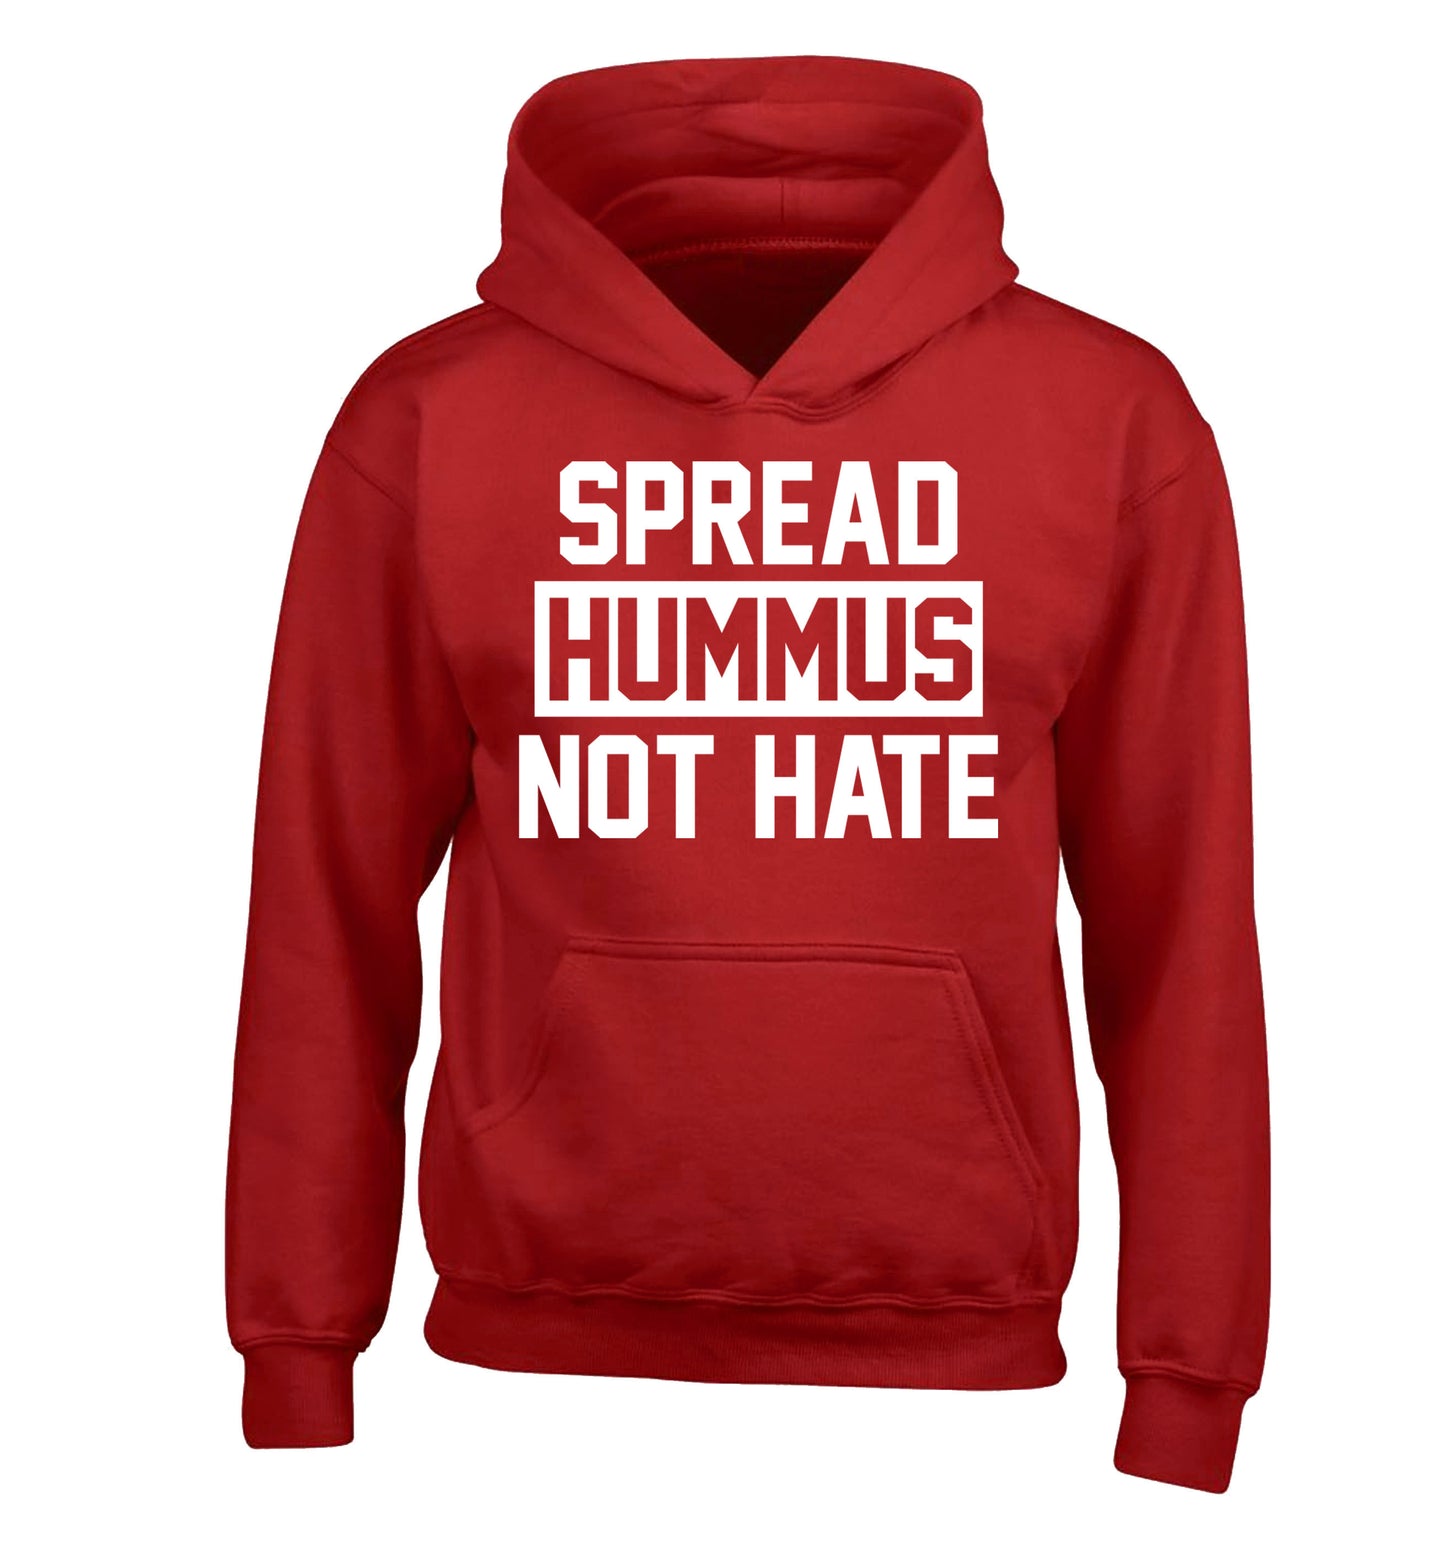 Spread hummus not hate children's red hoodie 12-14 Years